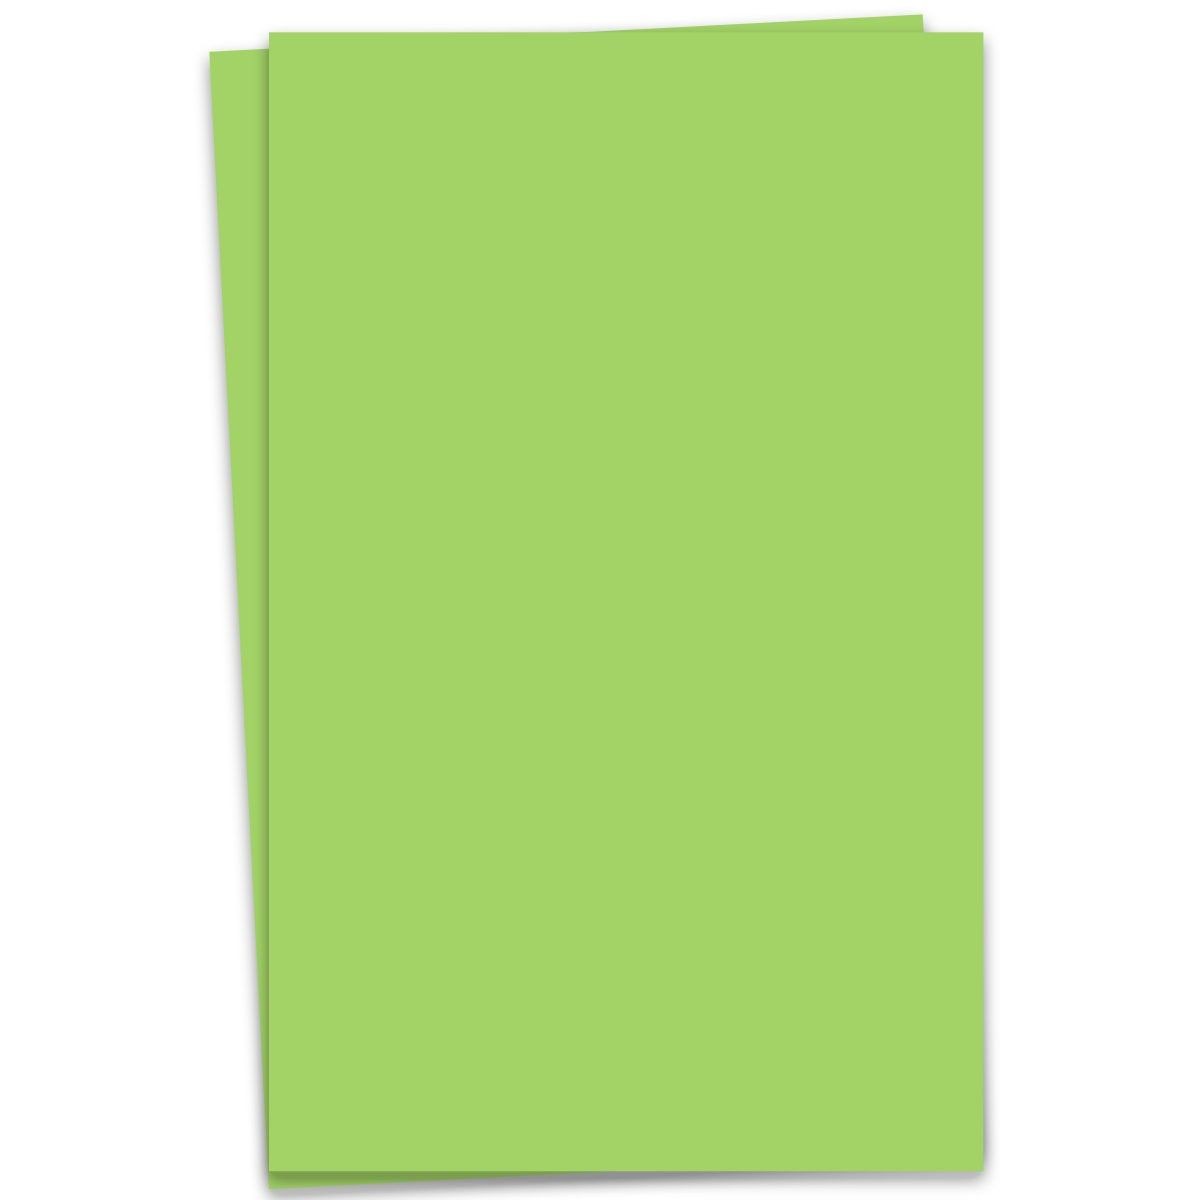 Burano PINK (10) - 12X12 Lightweight Cardstock Paper - 52lb Cover (140gsm)  - 75 PK